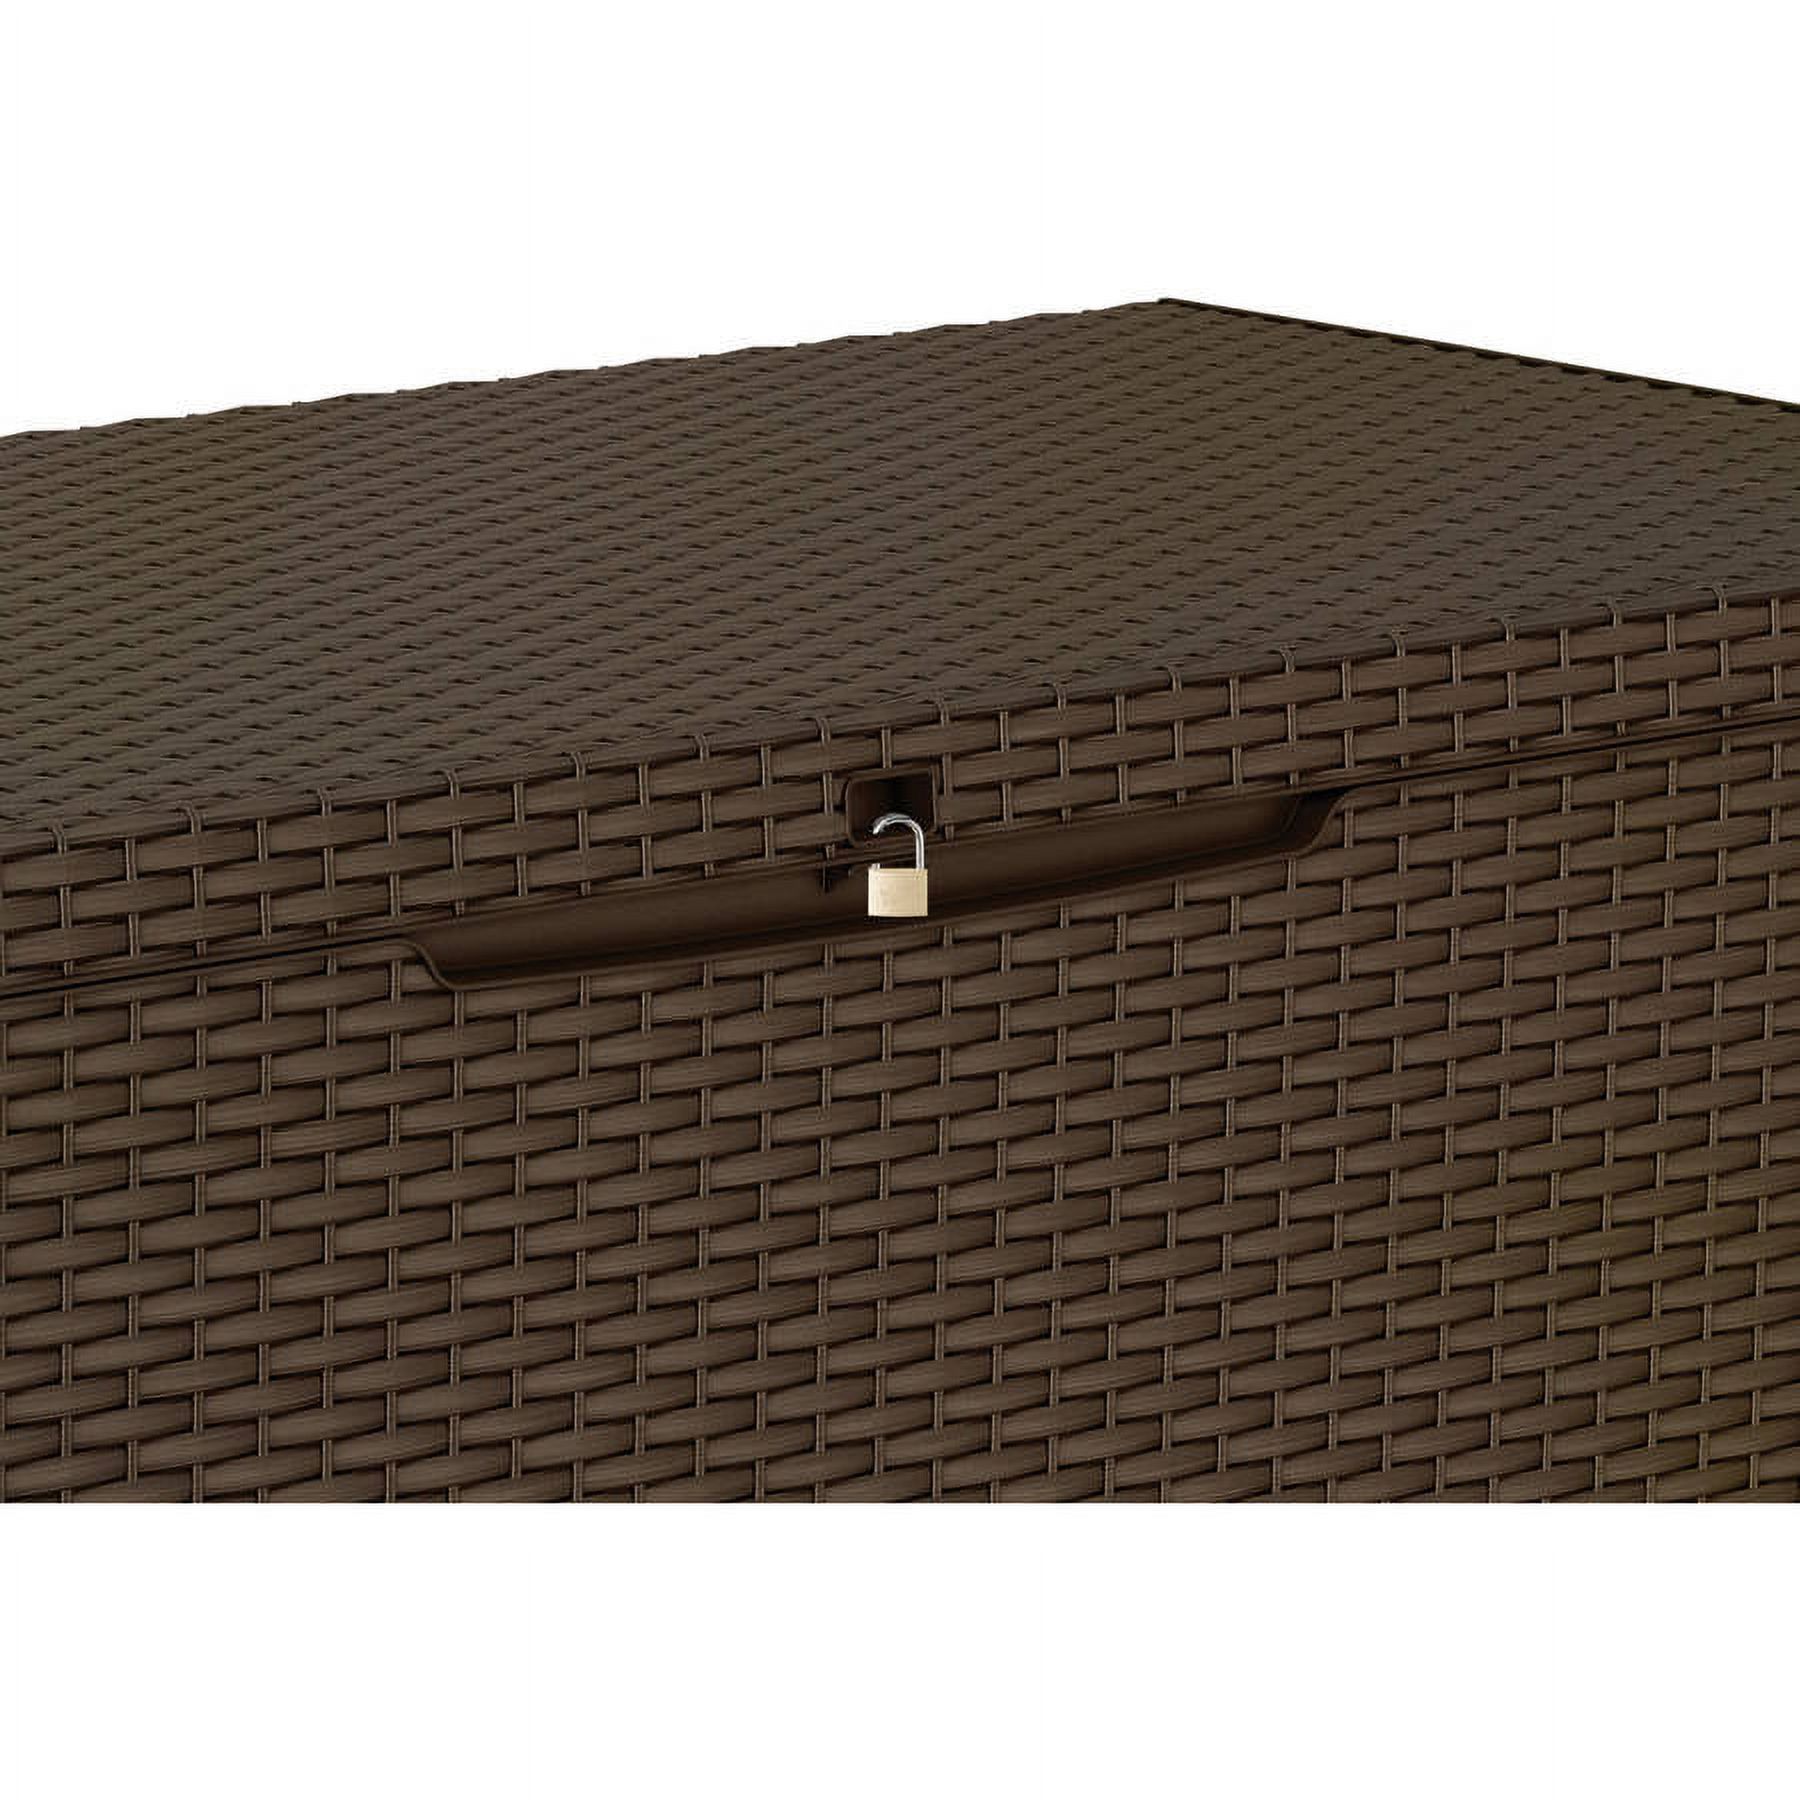 Keter Capri Rattan Resin 80-Gal Outdoor Storage Plastic Deck Box, Espresso Brown - image 4 of 6